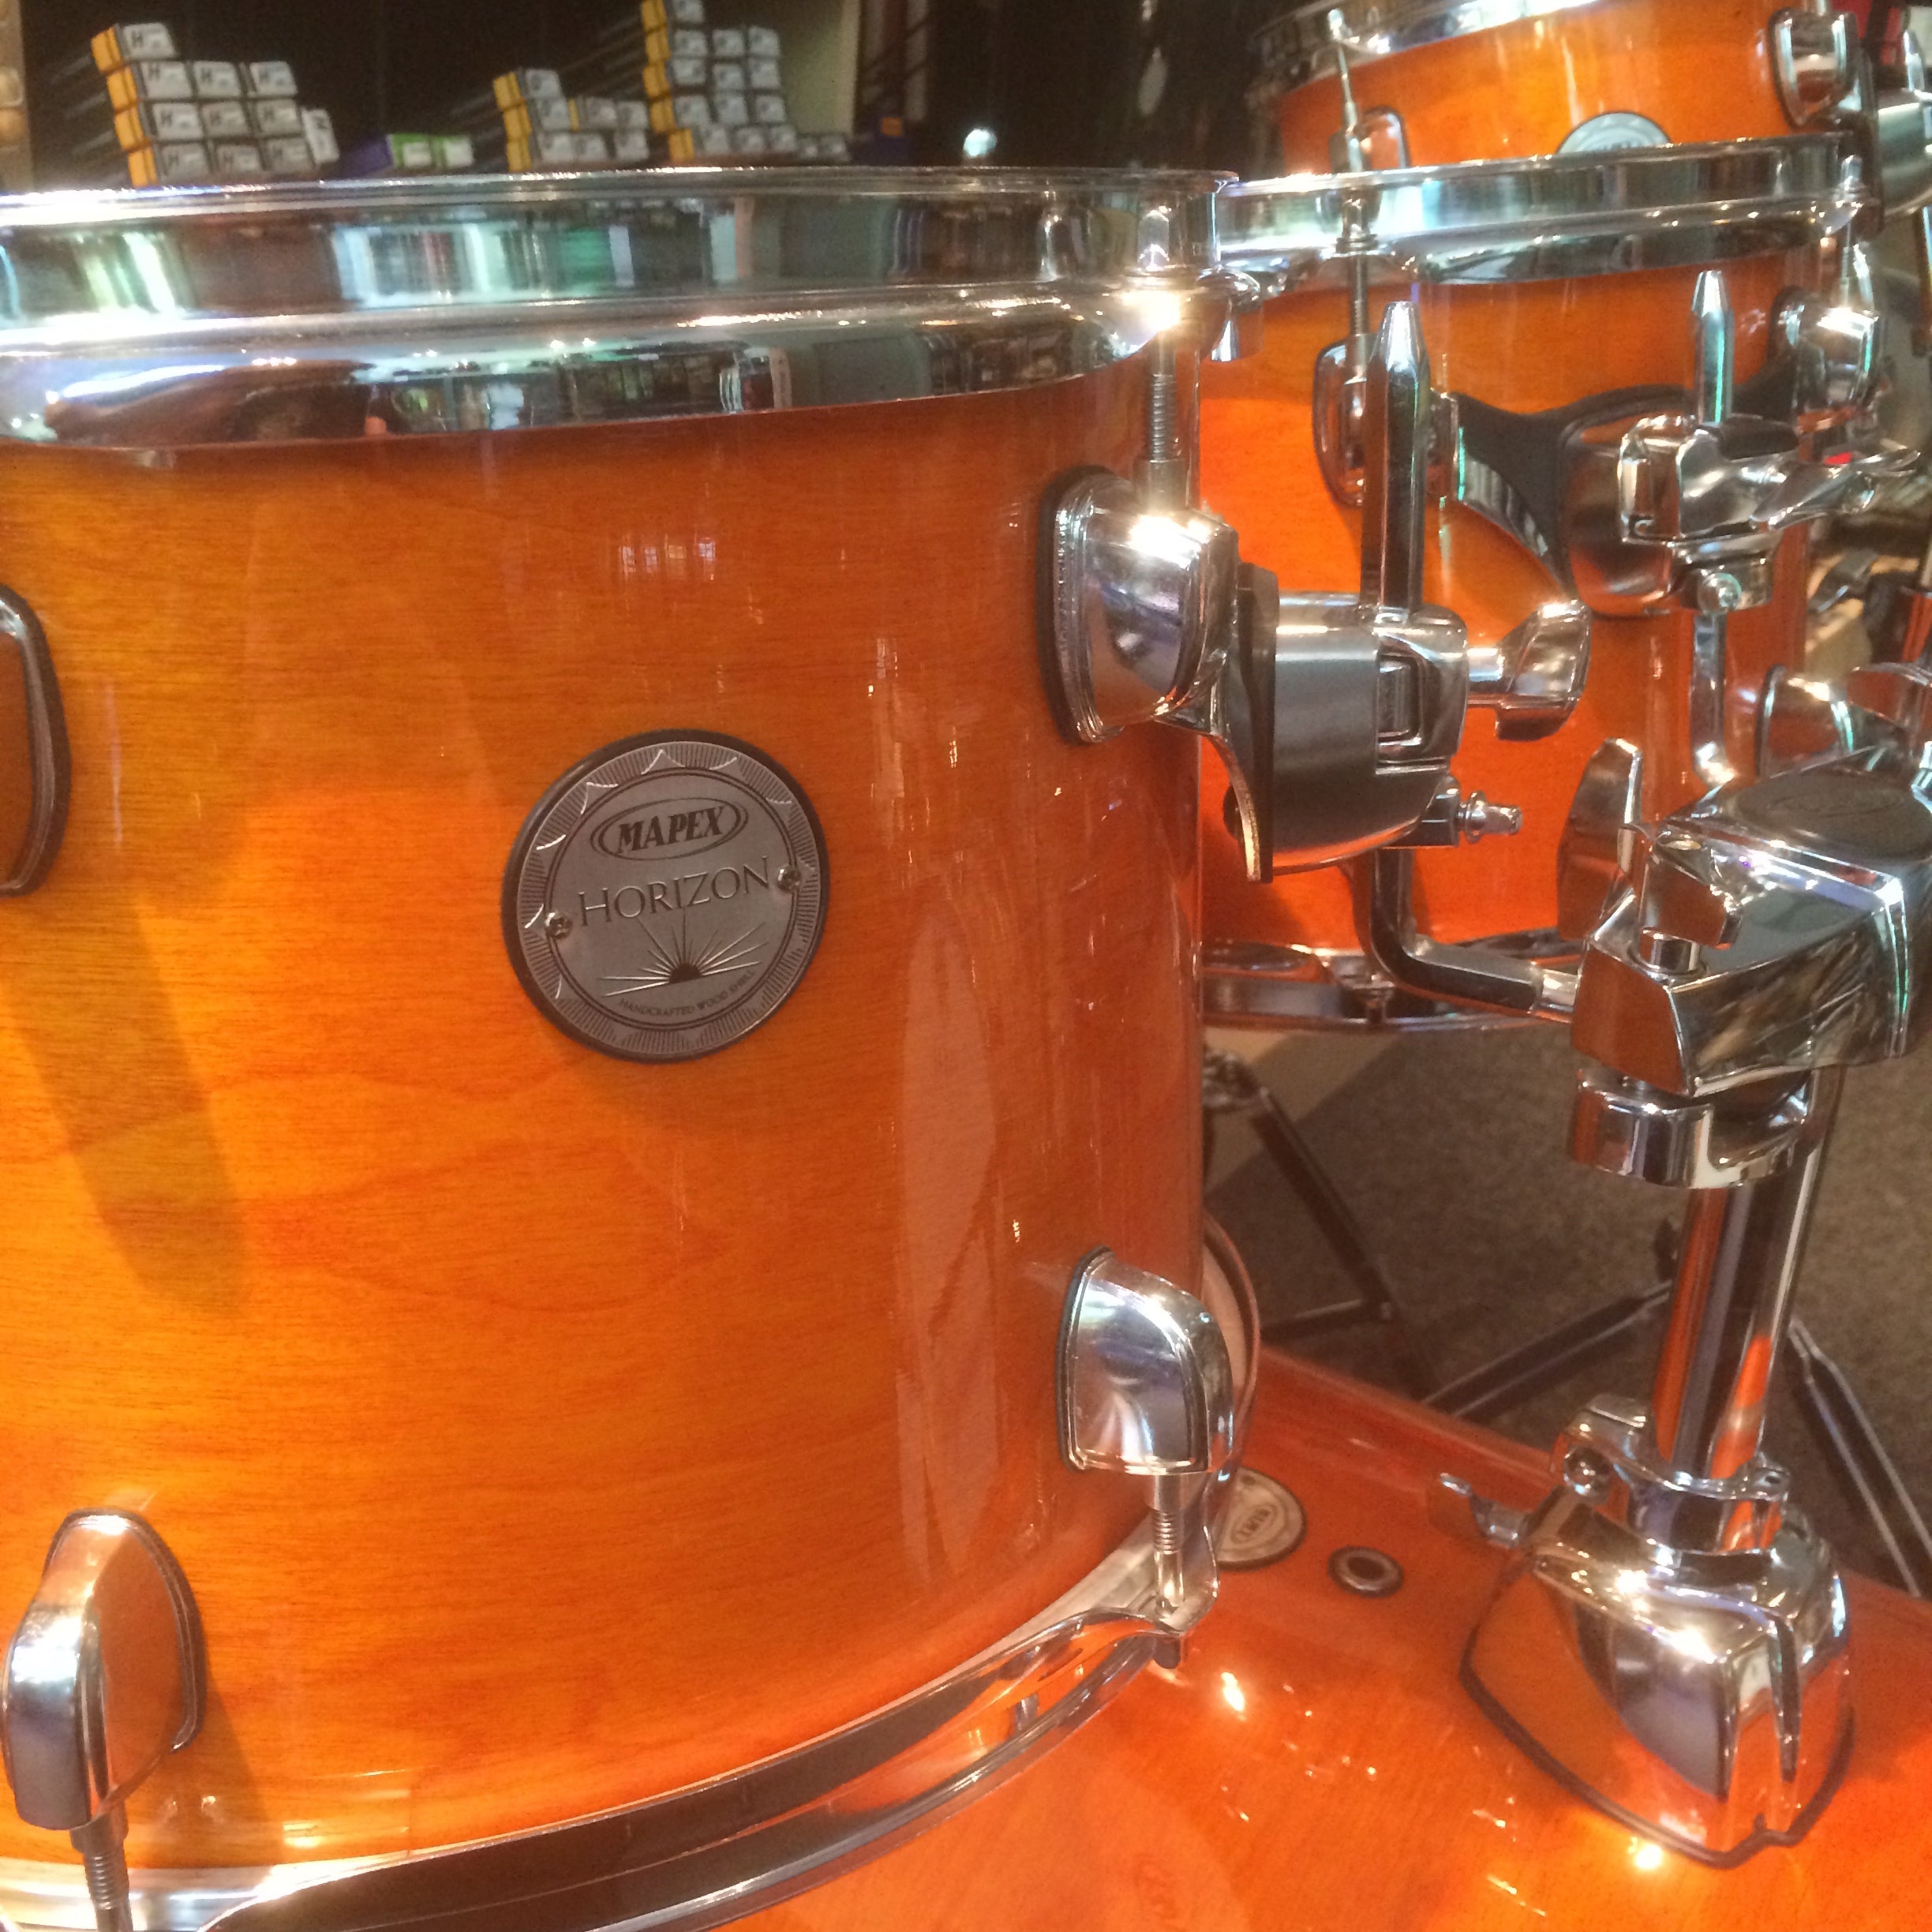 Mapex Horizon drum kit